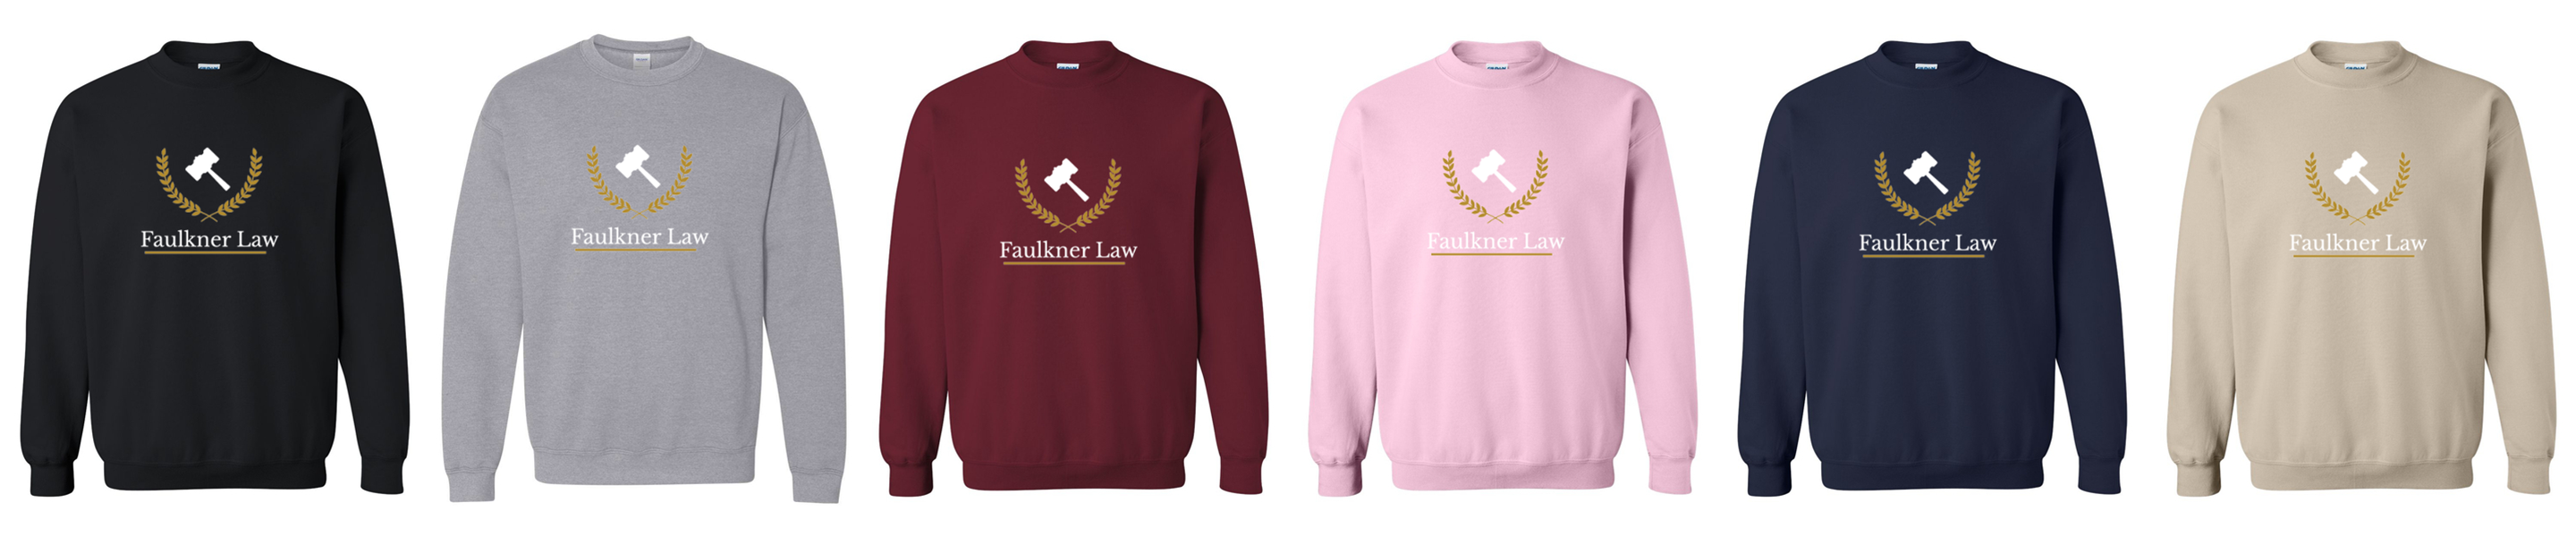 Faulkner Law School - Crew Sweatshirts in various colors